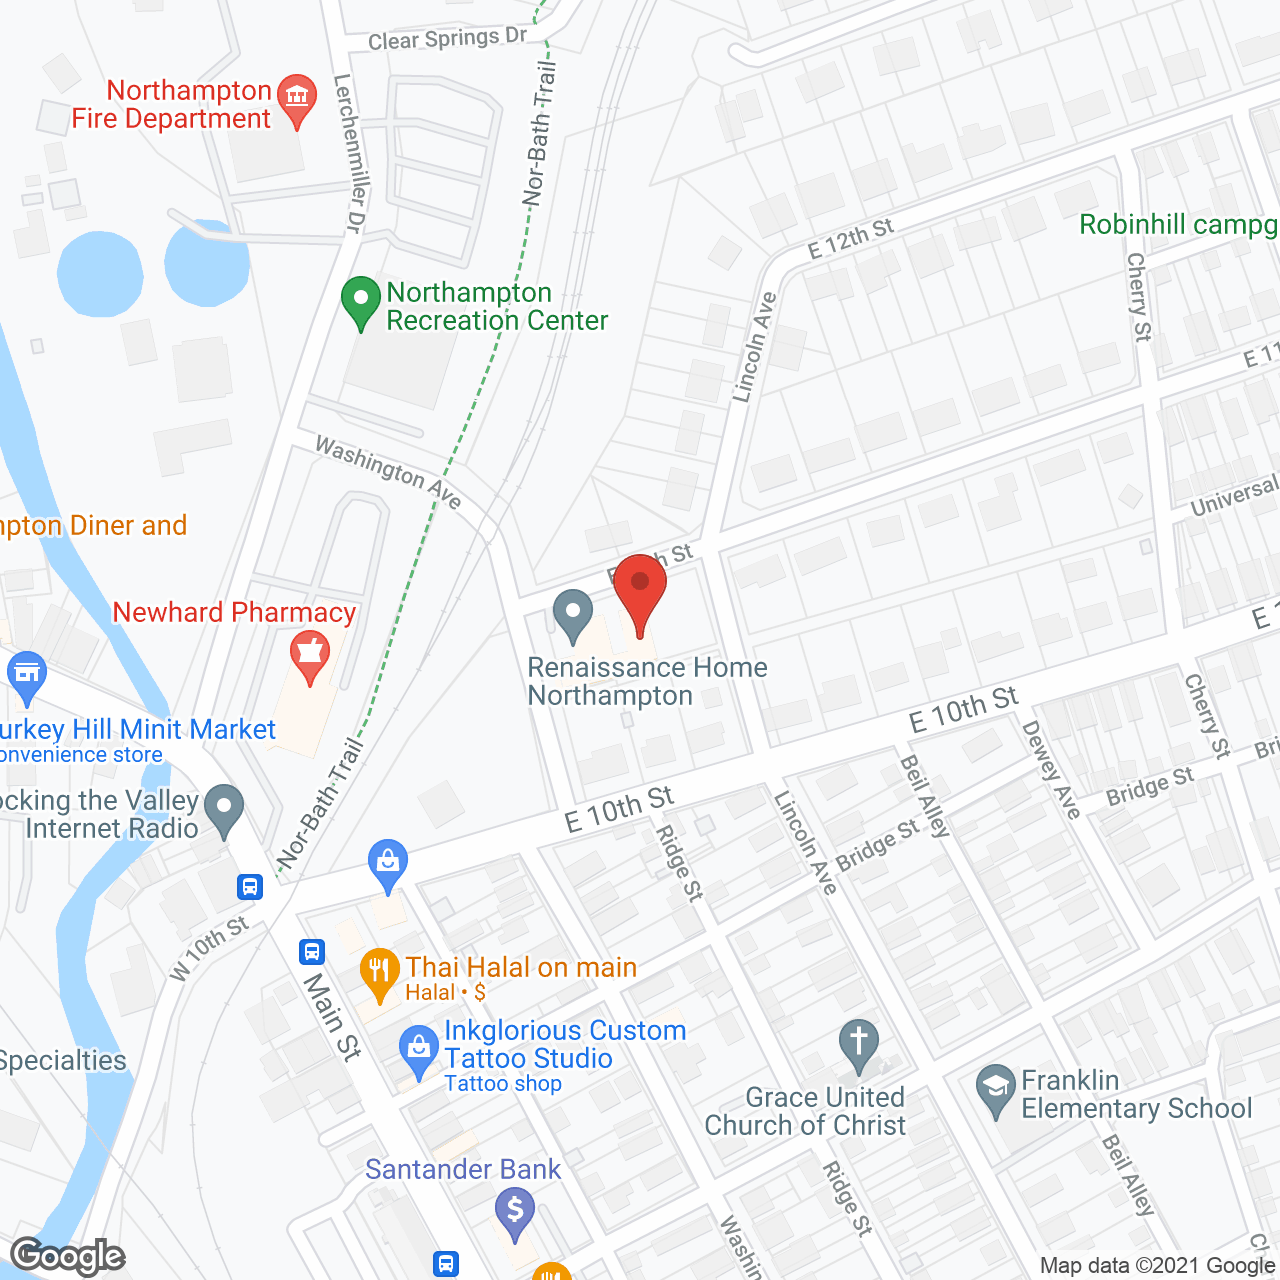 Renaissance Home Northampton in google map